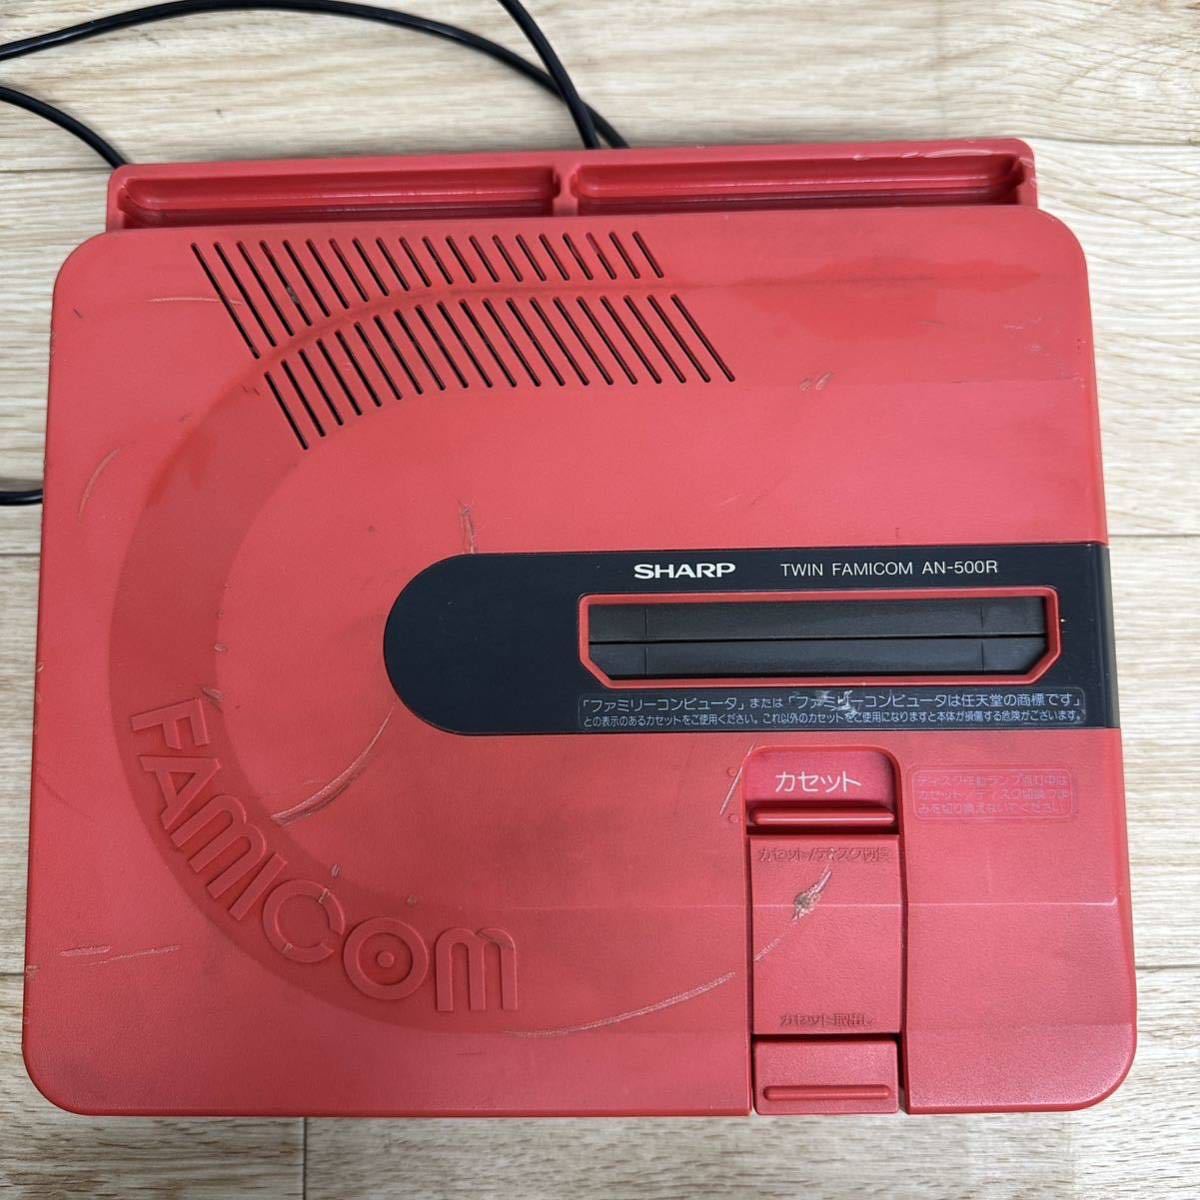 SHARP sharp twin Famicom AN-500R TWIN FAMICOM работоспособность не проверялась [ труба 2619V]